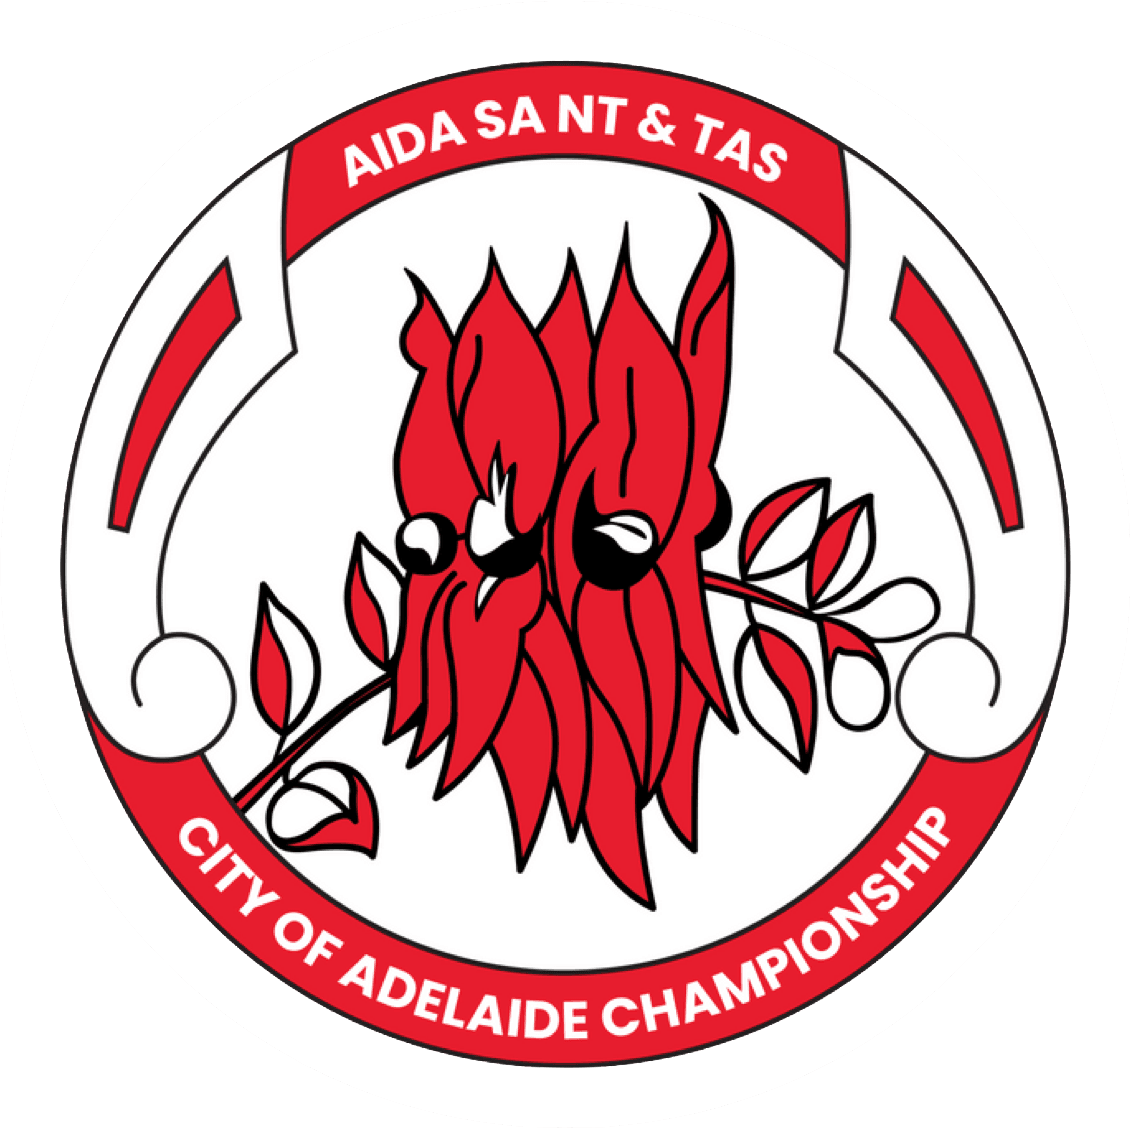 logo for City of Adelaide Championship